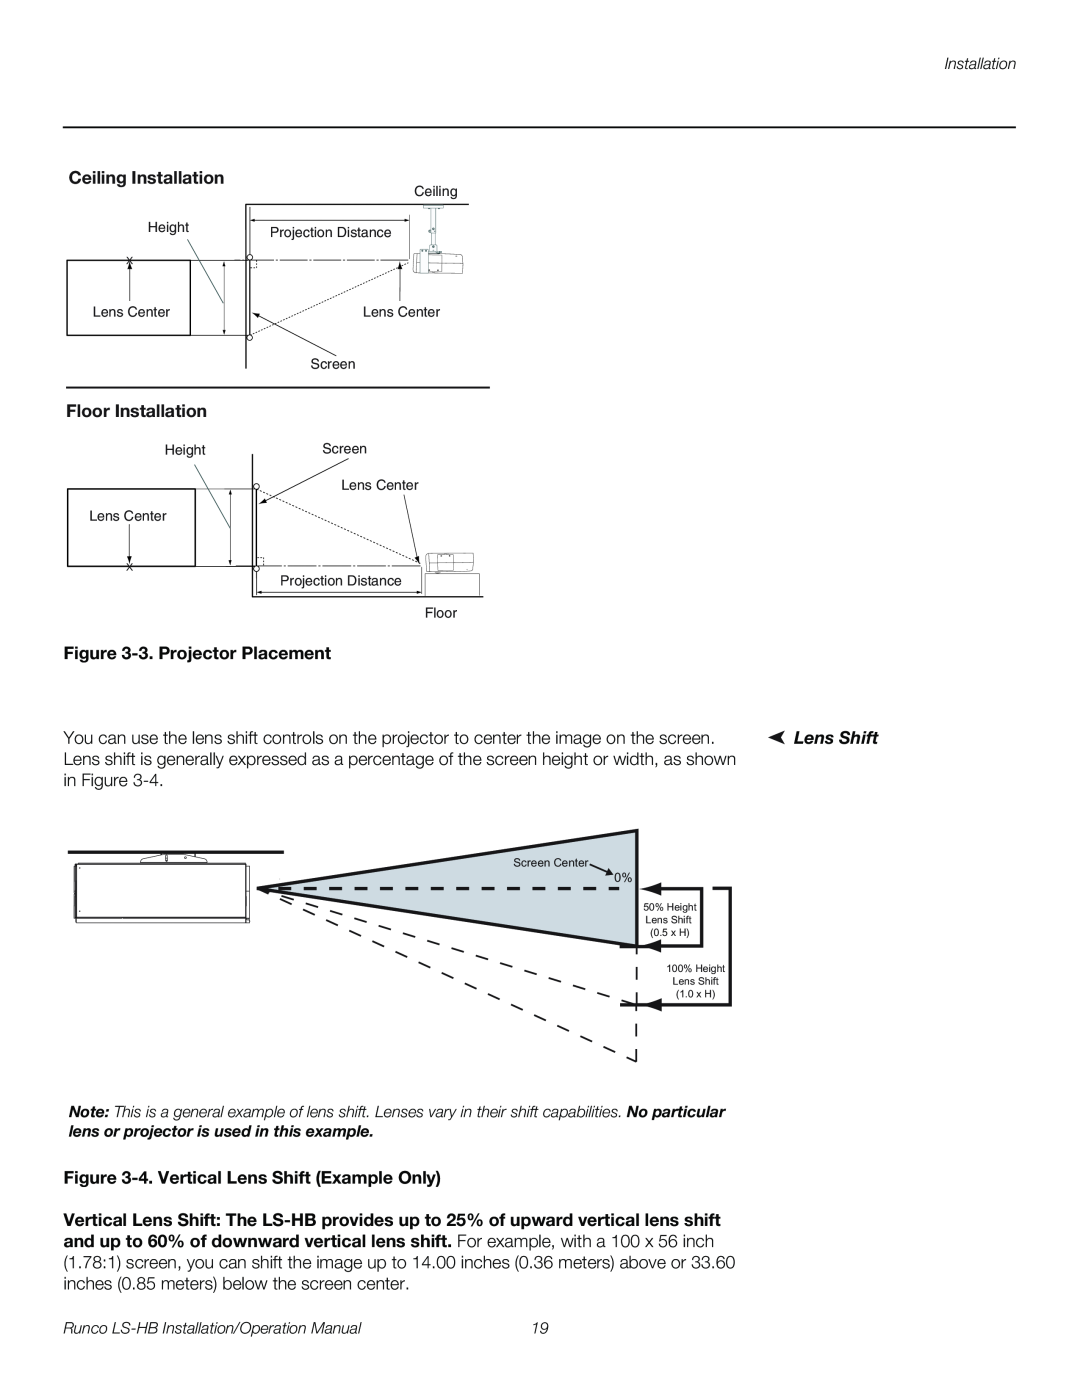 Runco LS-HB operation manual Ceiling Installation, Floor Installation, 3. Projector Placement, Lens Shift 